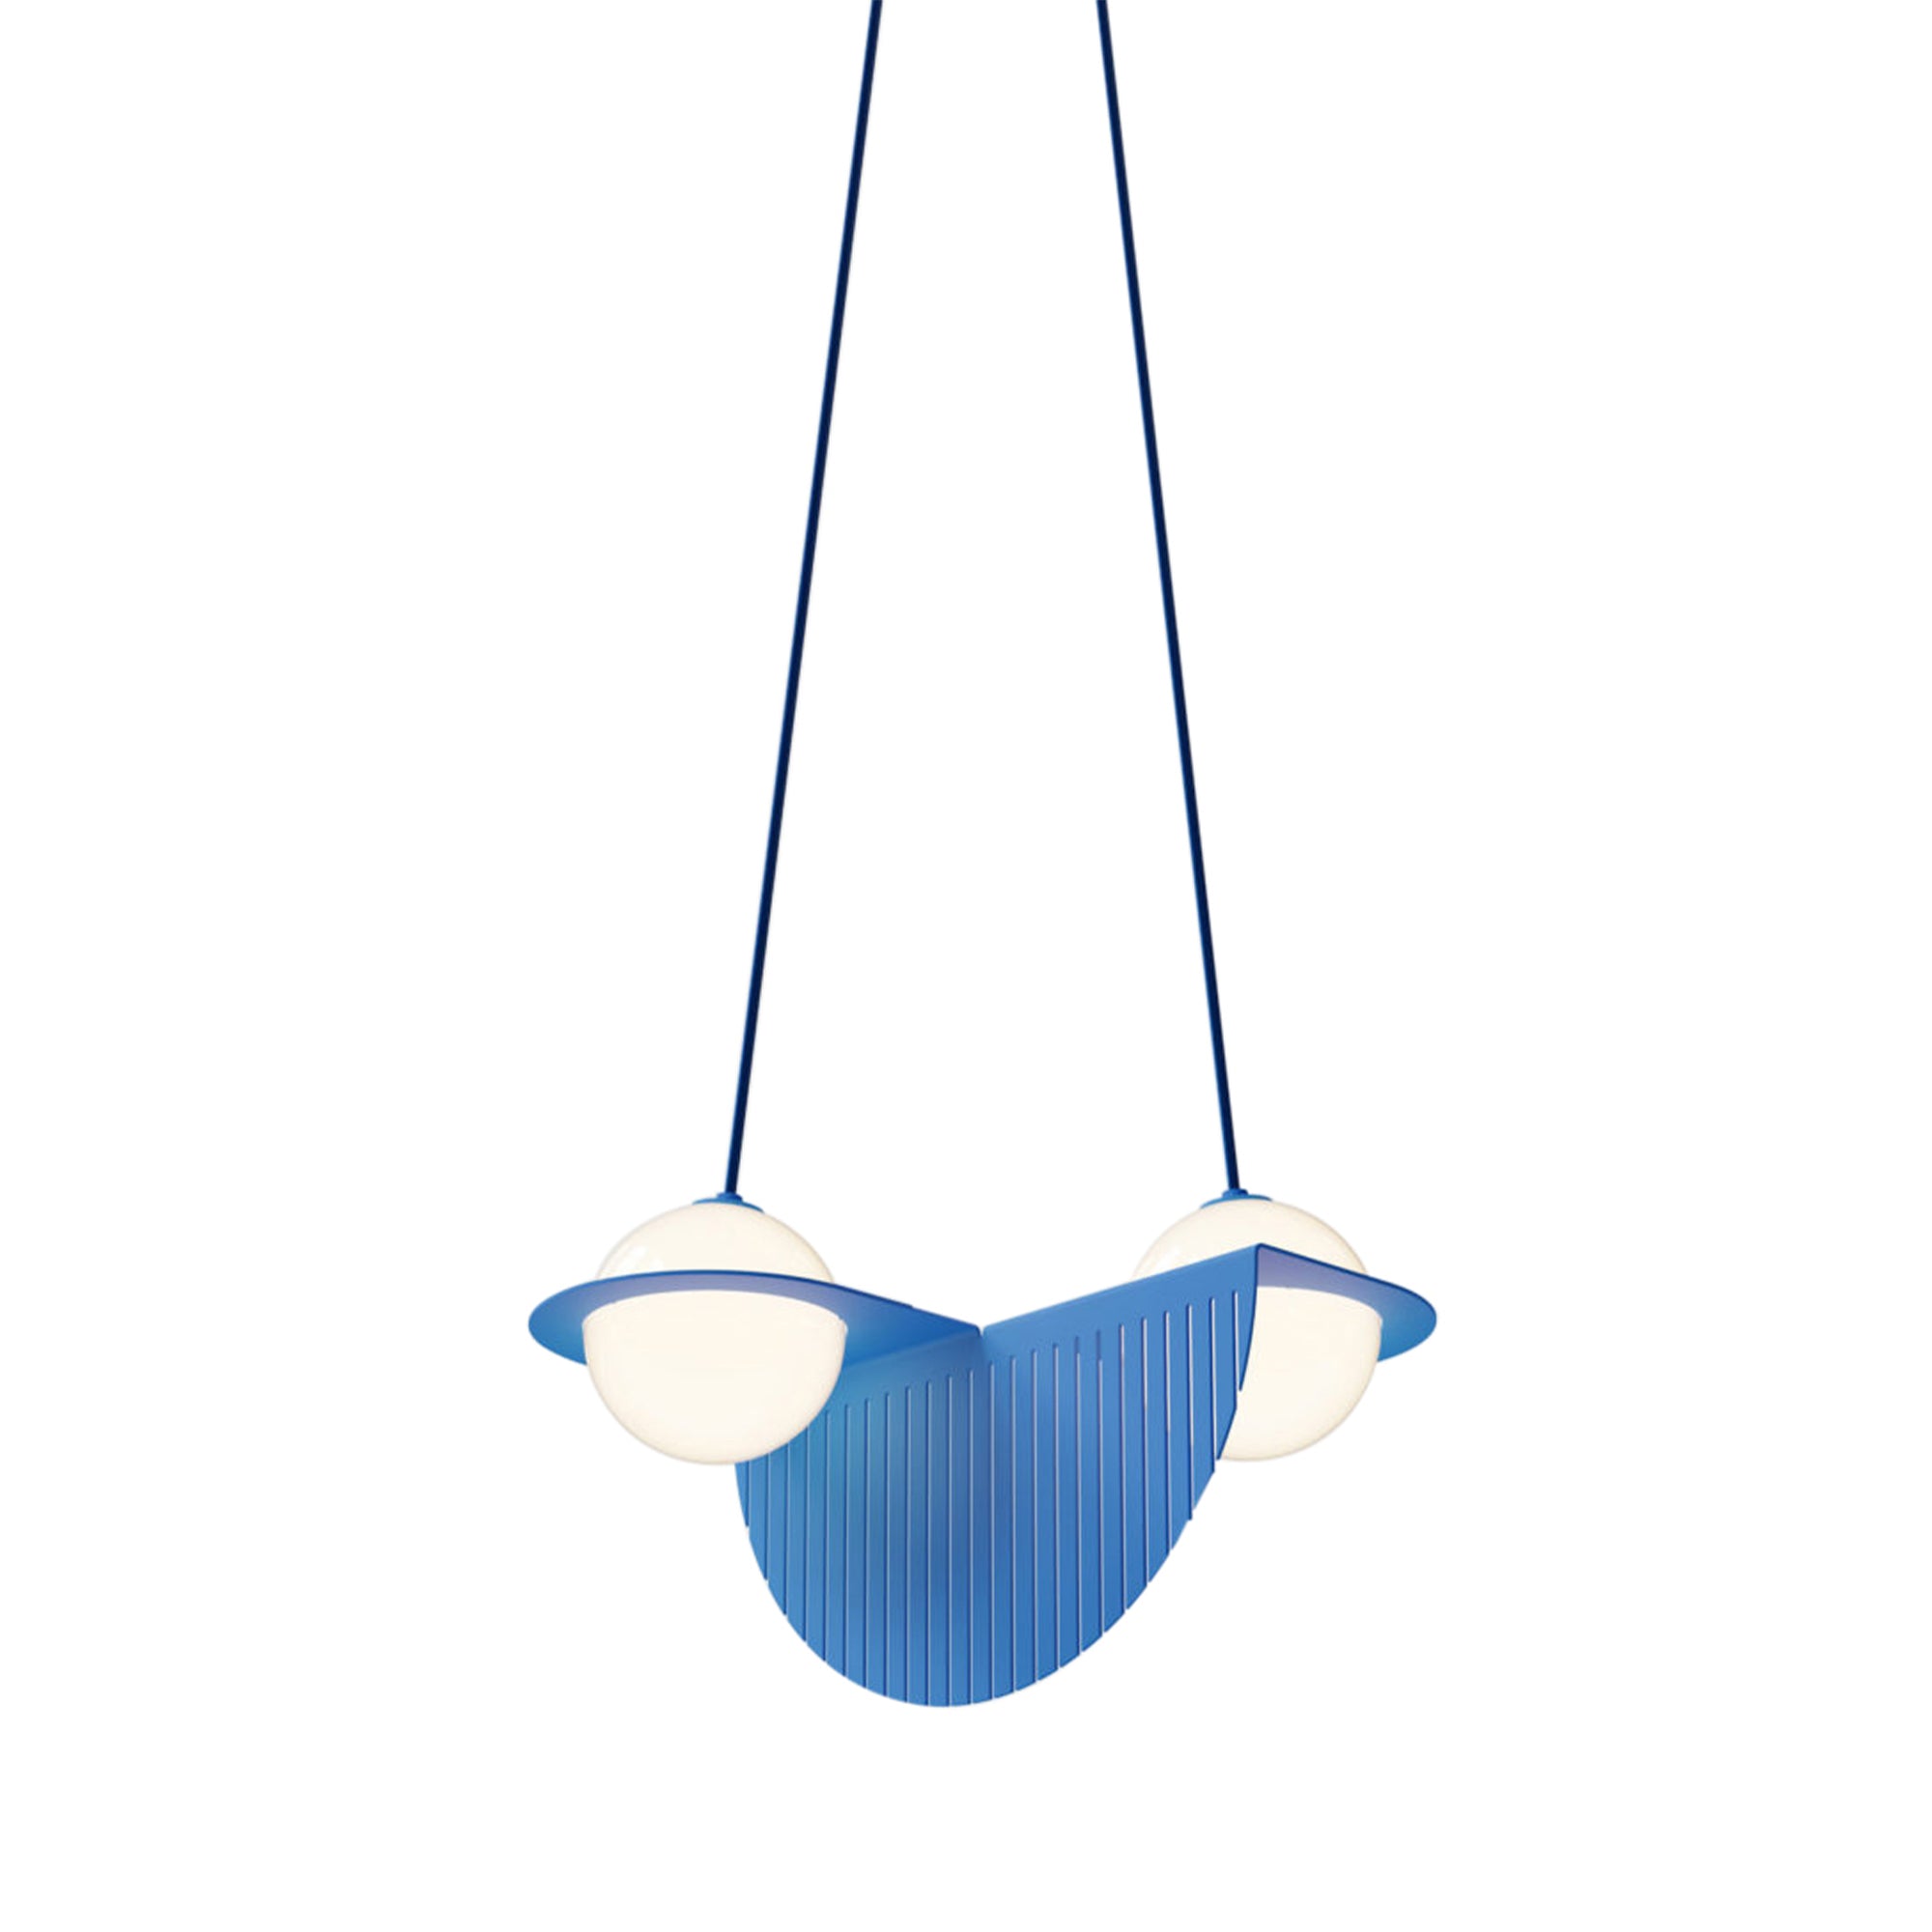 Laurent 09 Suspension Lamp: Blue + Blue + Angled Wires